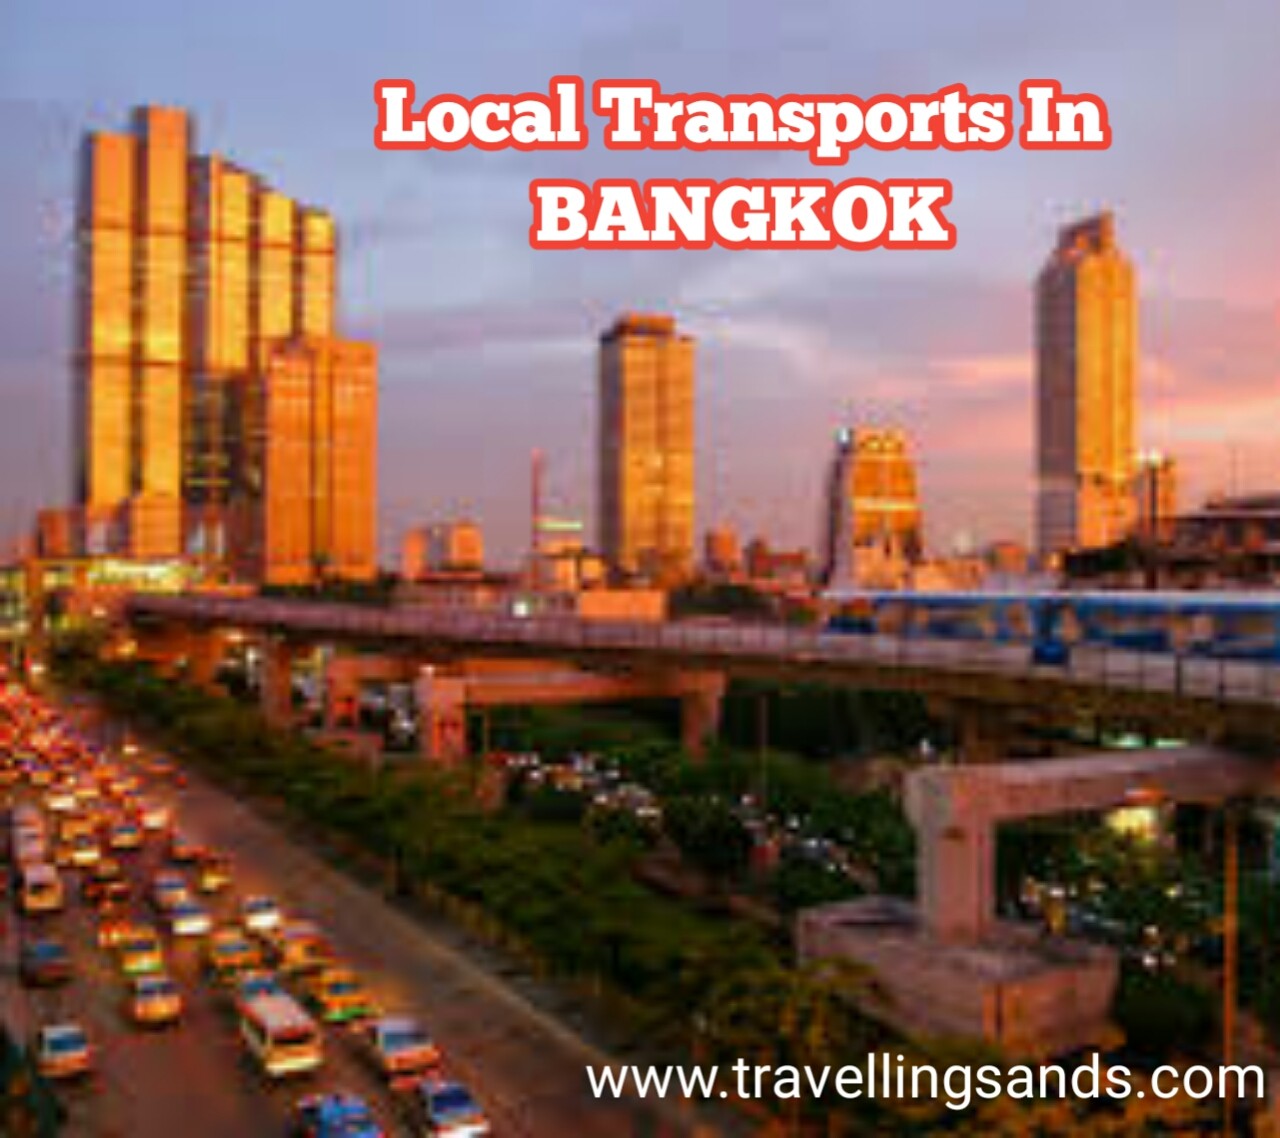 Local Transports in Bangkok